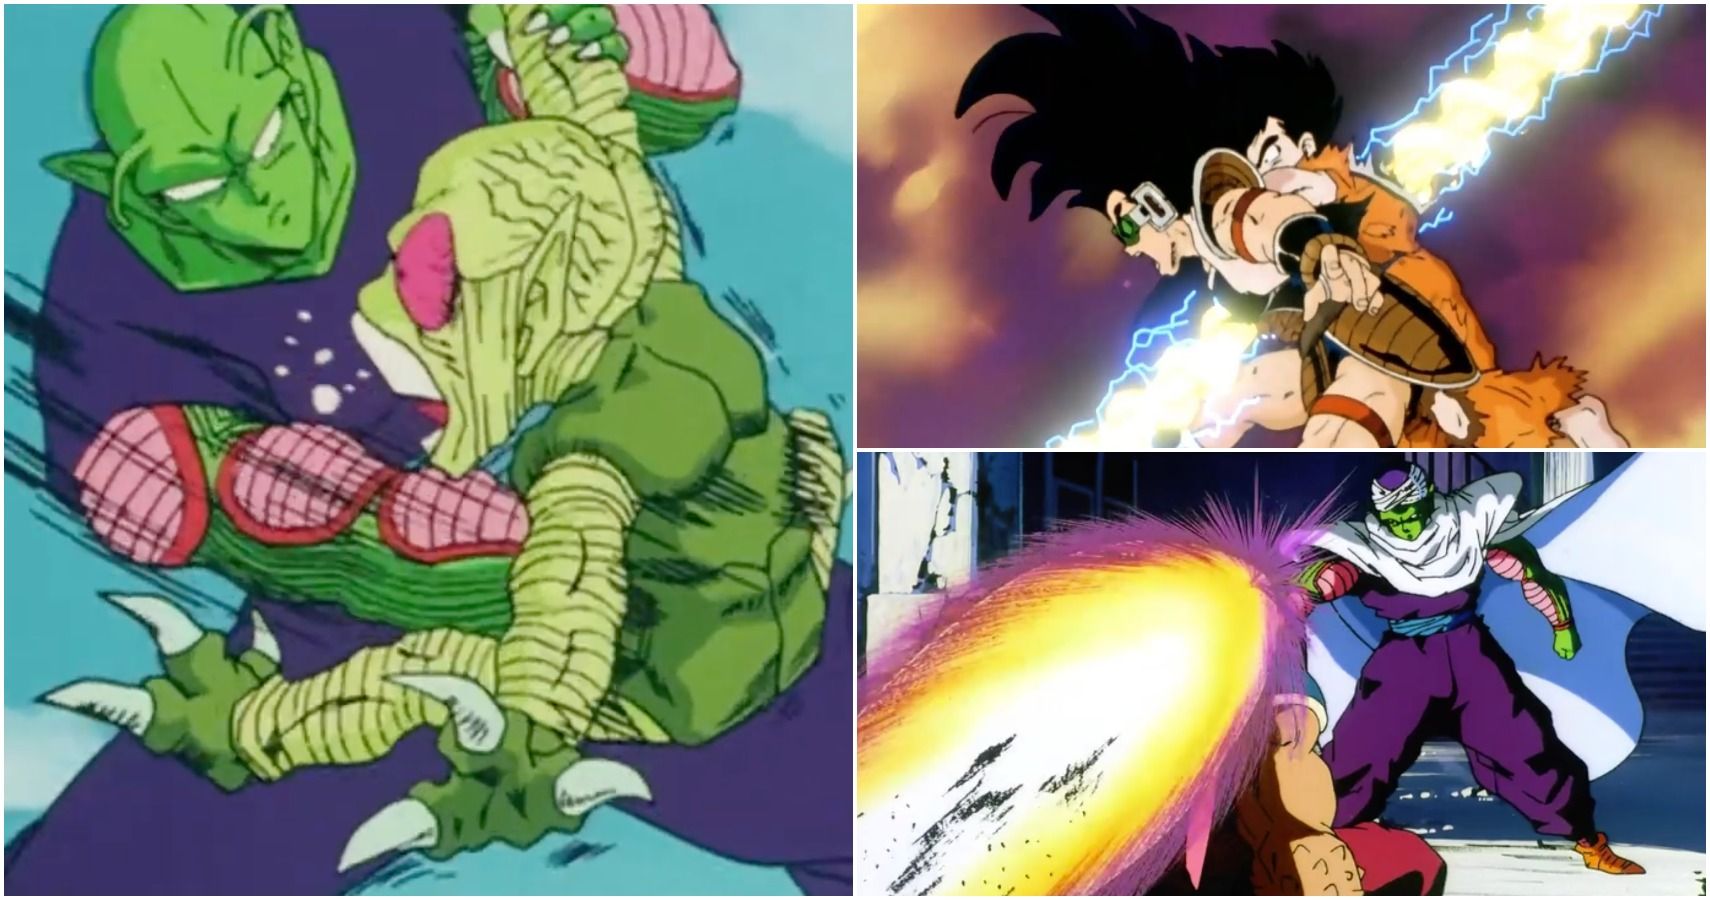 Raditz Goku Vegeta Piccolo Nappa, goku, dragon, fictional